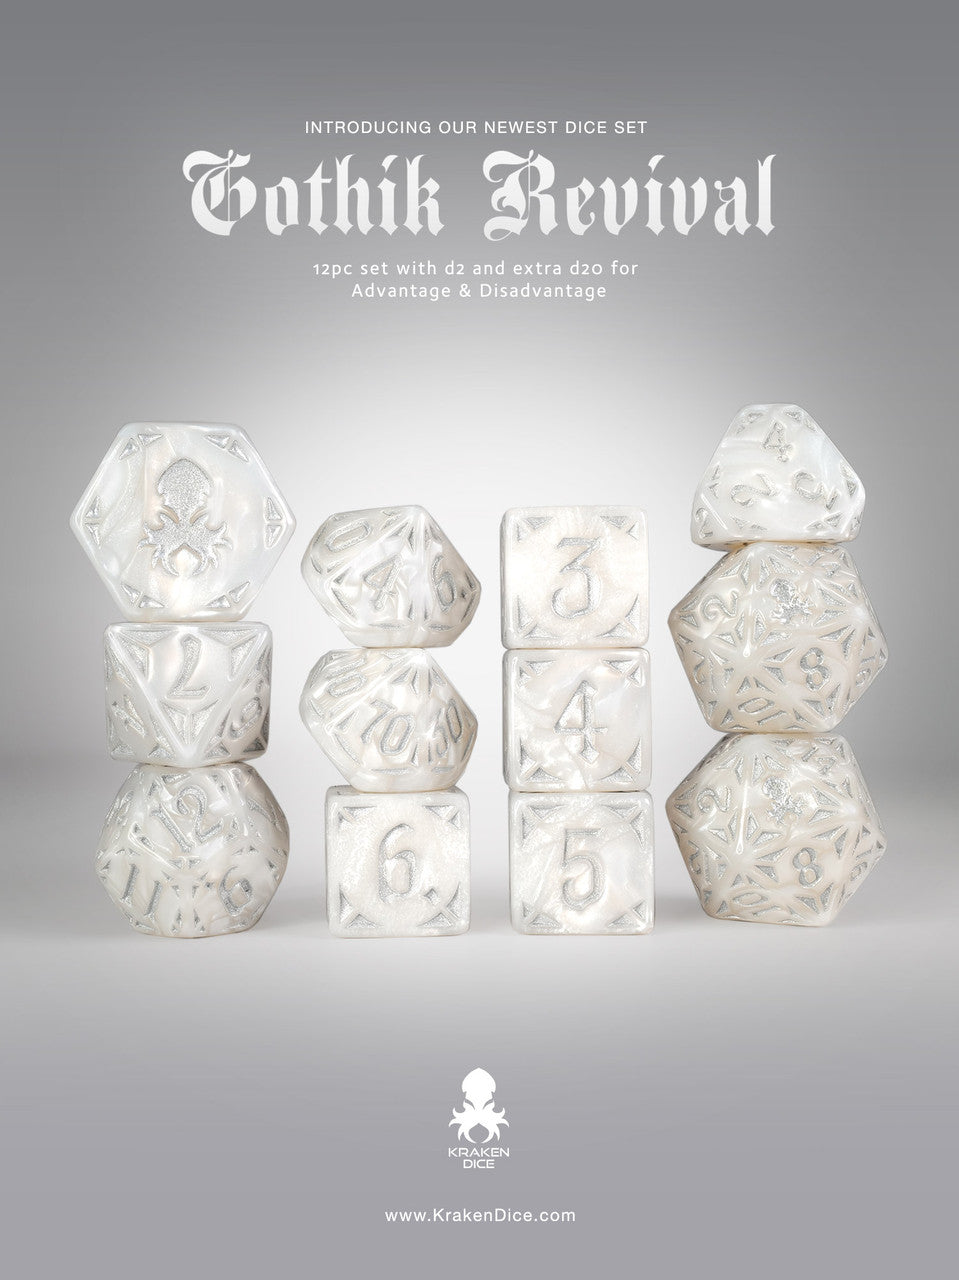 White Gothik Revival  RPG 12pc Dice Set